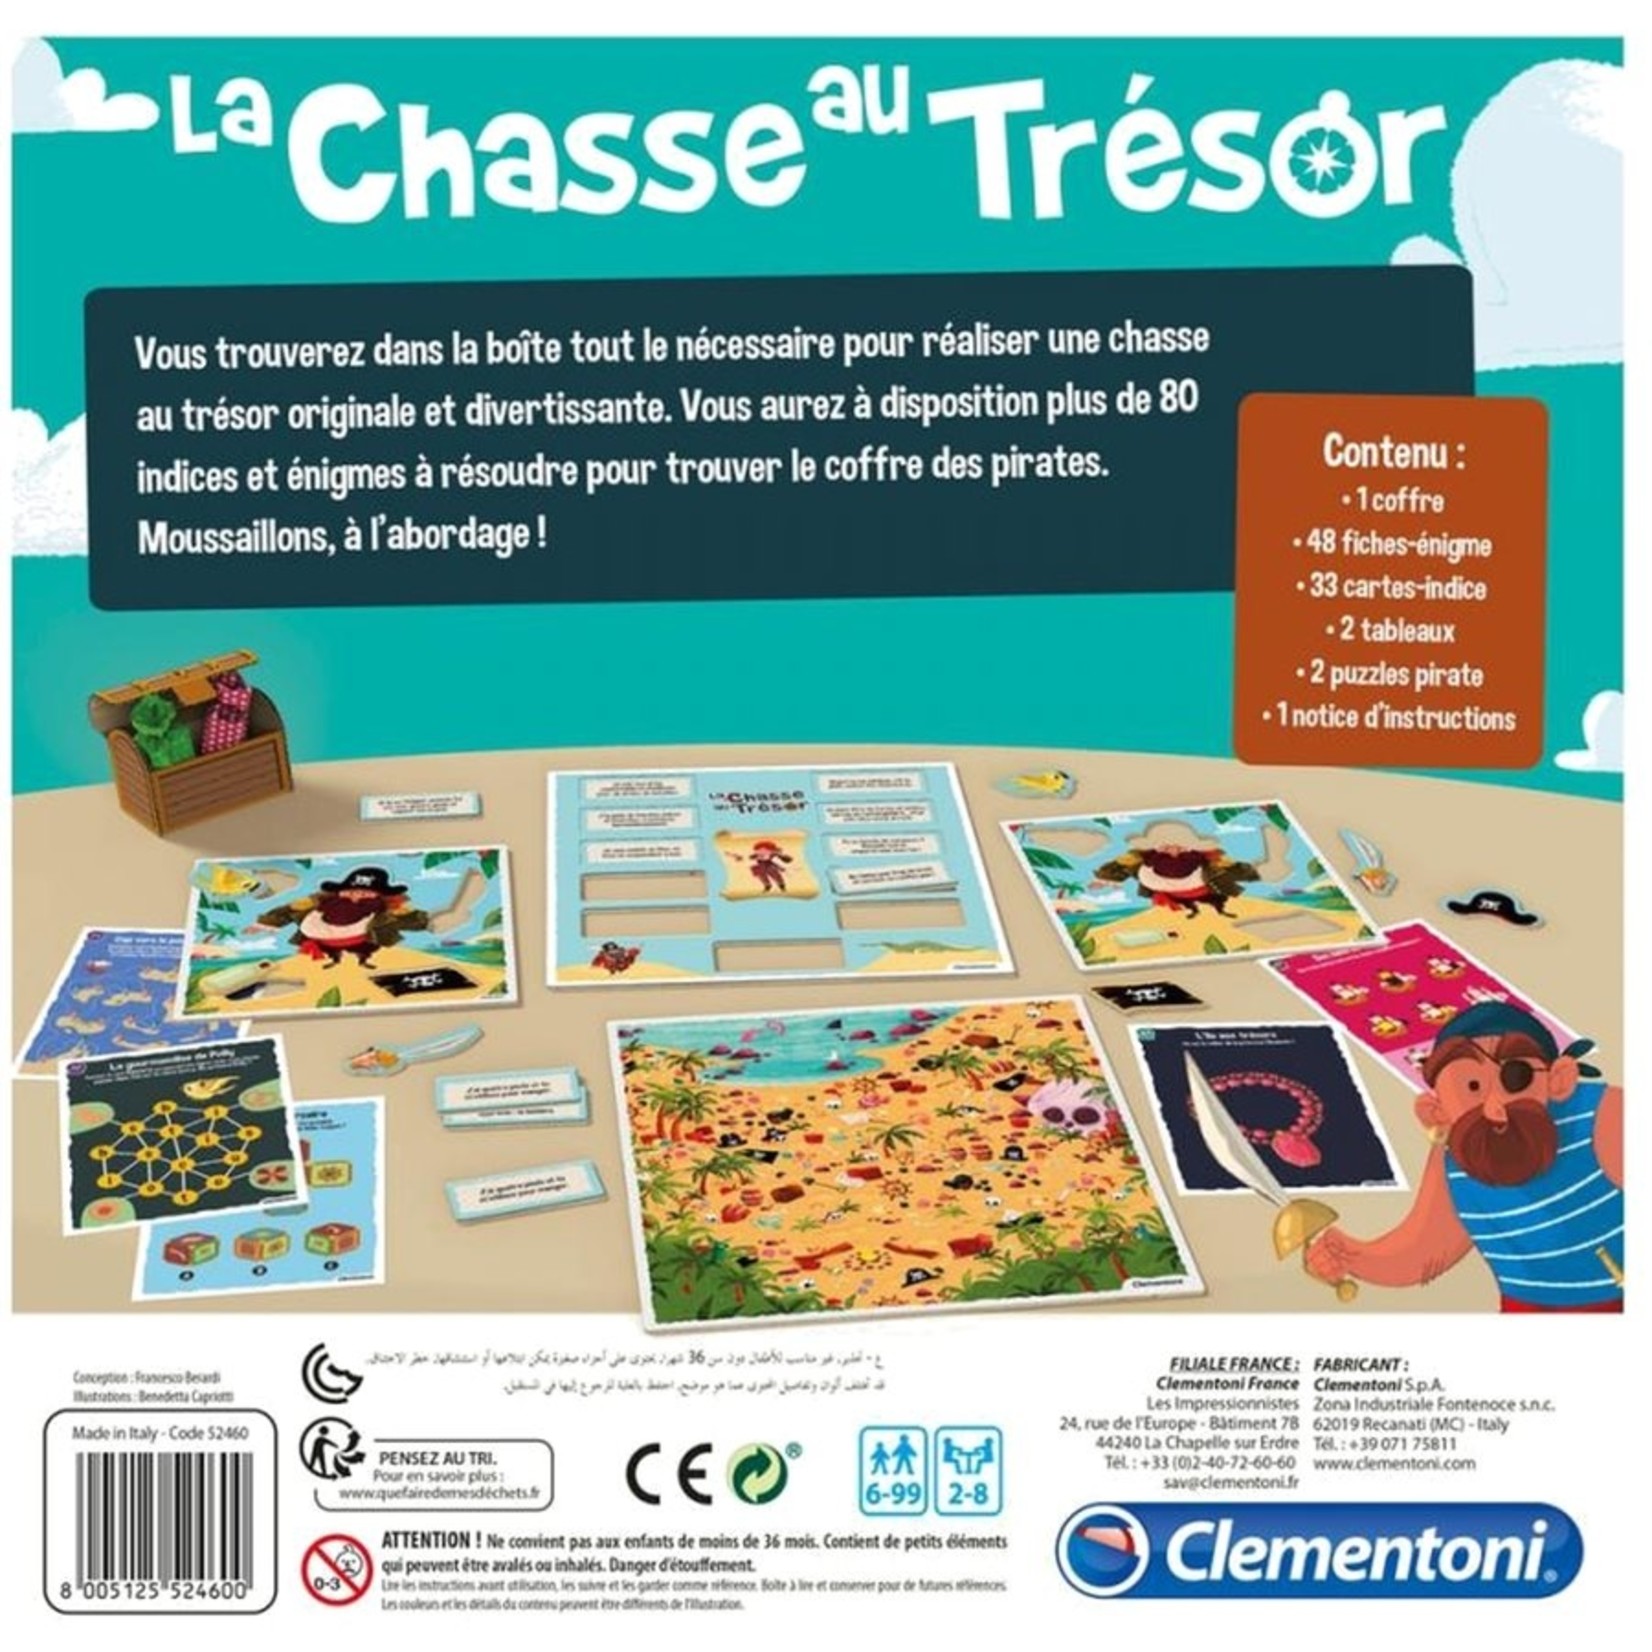 Clementoni La Chasse au Trésor